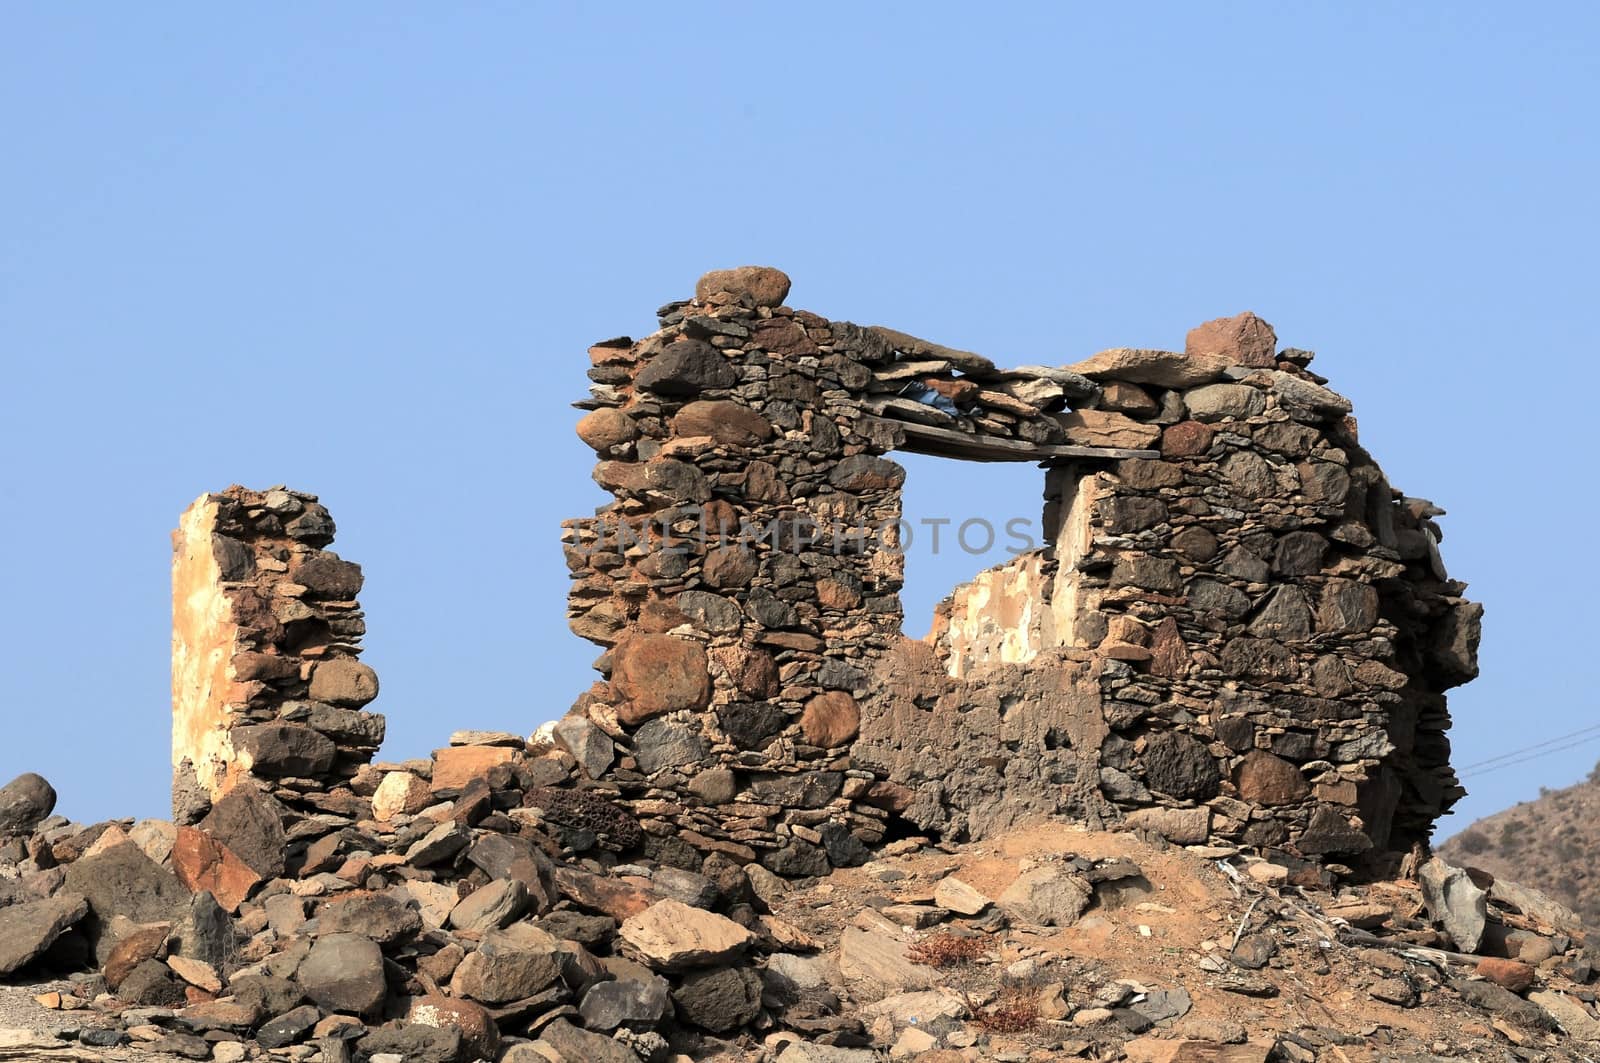 Ancient Rock House in Gran Canaria Island, Spain